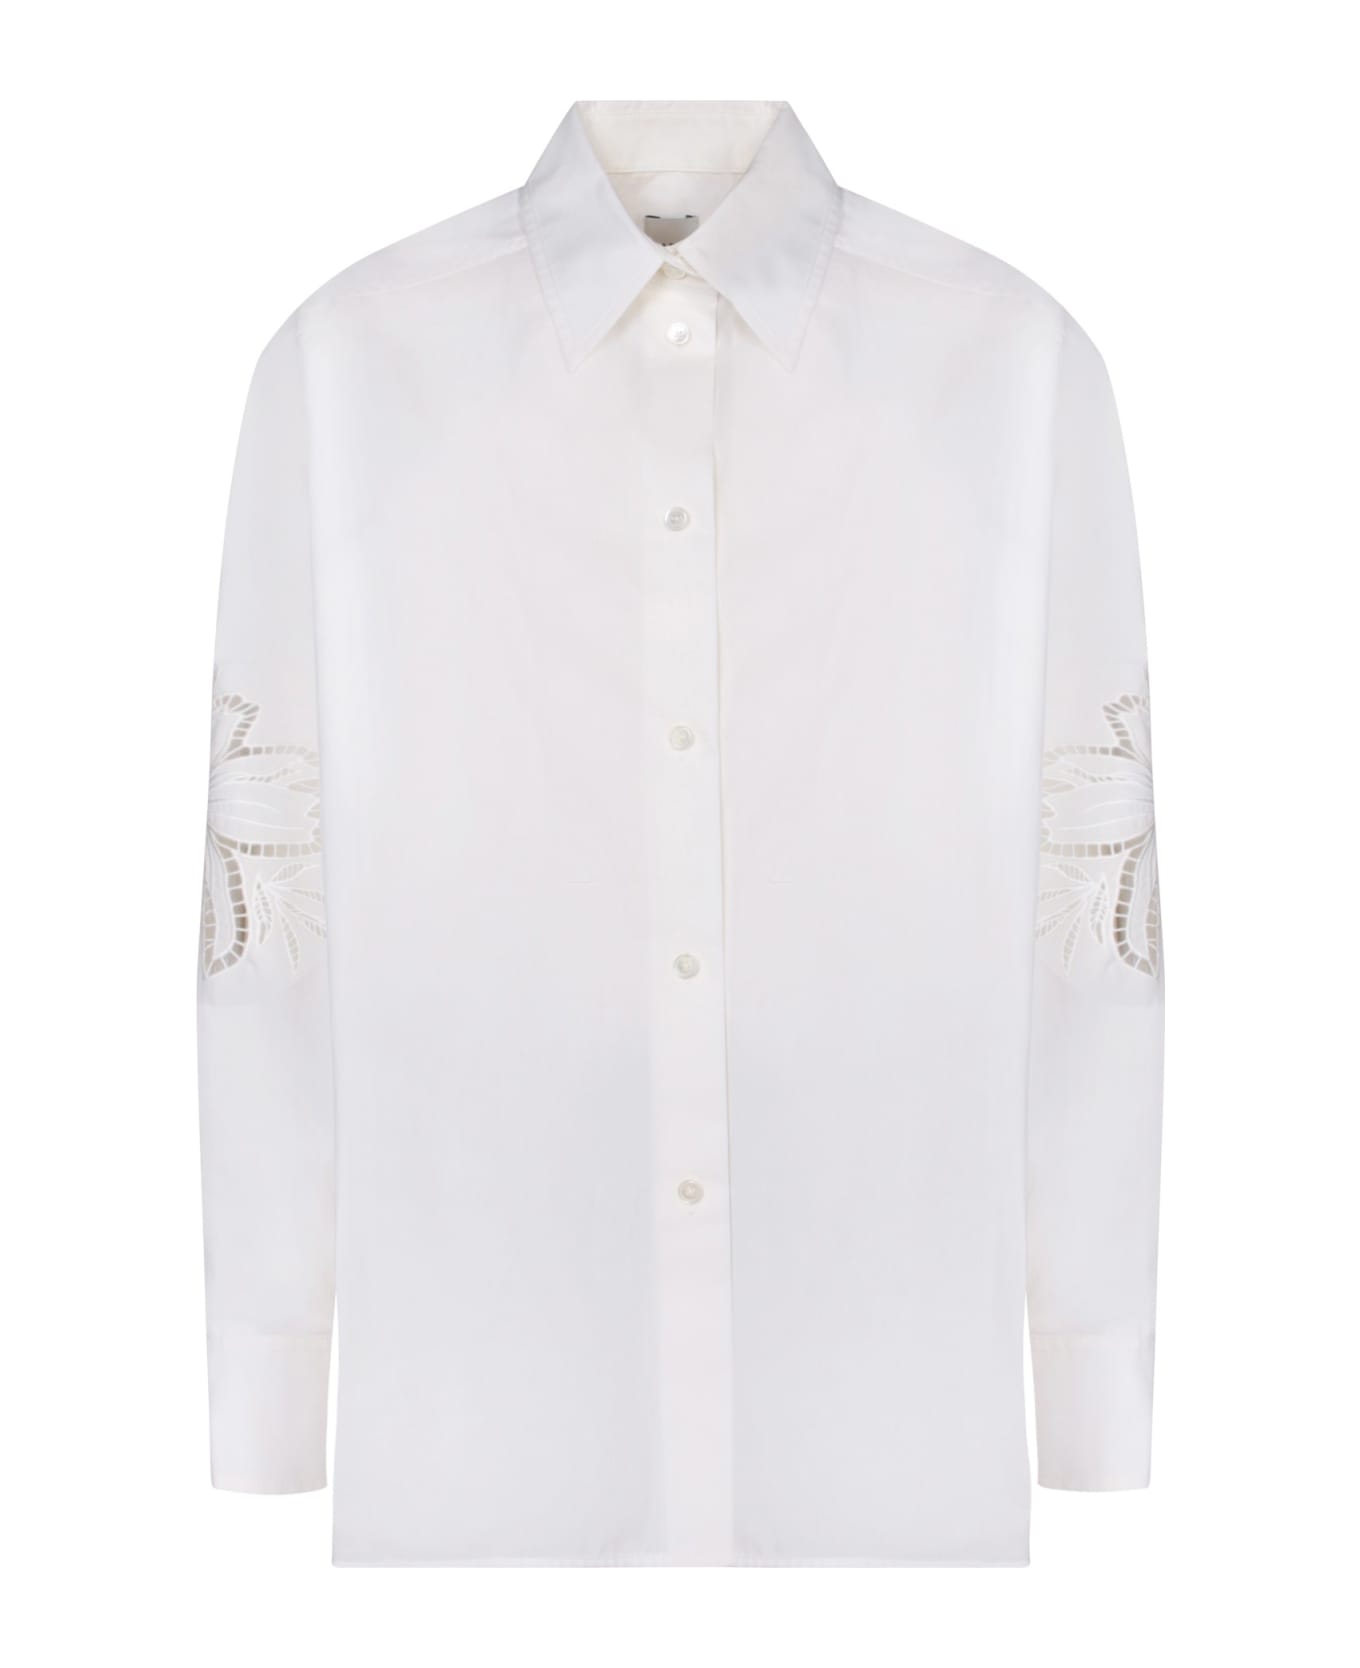 Paul Smith Oversize White Shirt - White